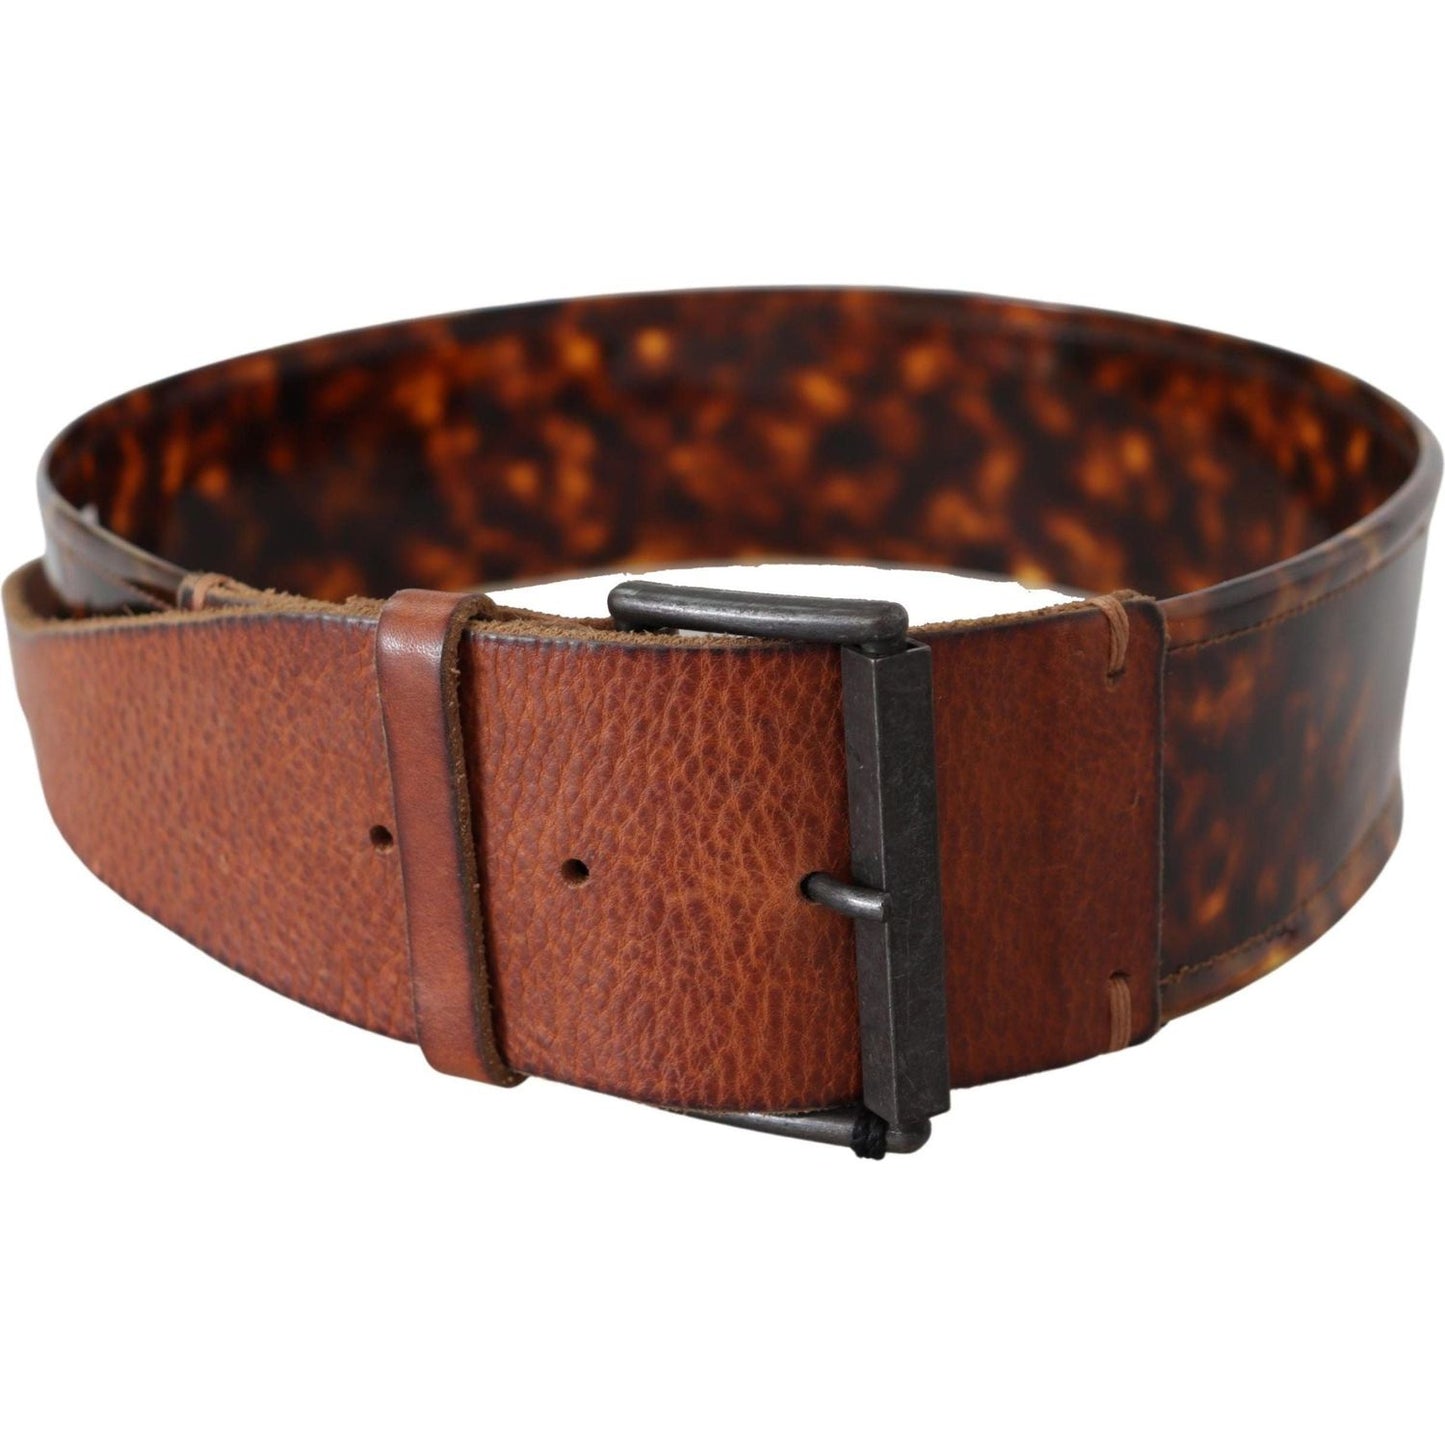 Ermanno Scervino Elegant Dark Brown Leather Belt with Vintage Buckle dark-brown-leather-wide-buckle-belt WOMAN BELTS IMG_6983-scaled-664c666e-18f.jpg